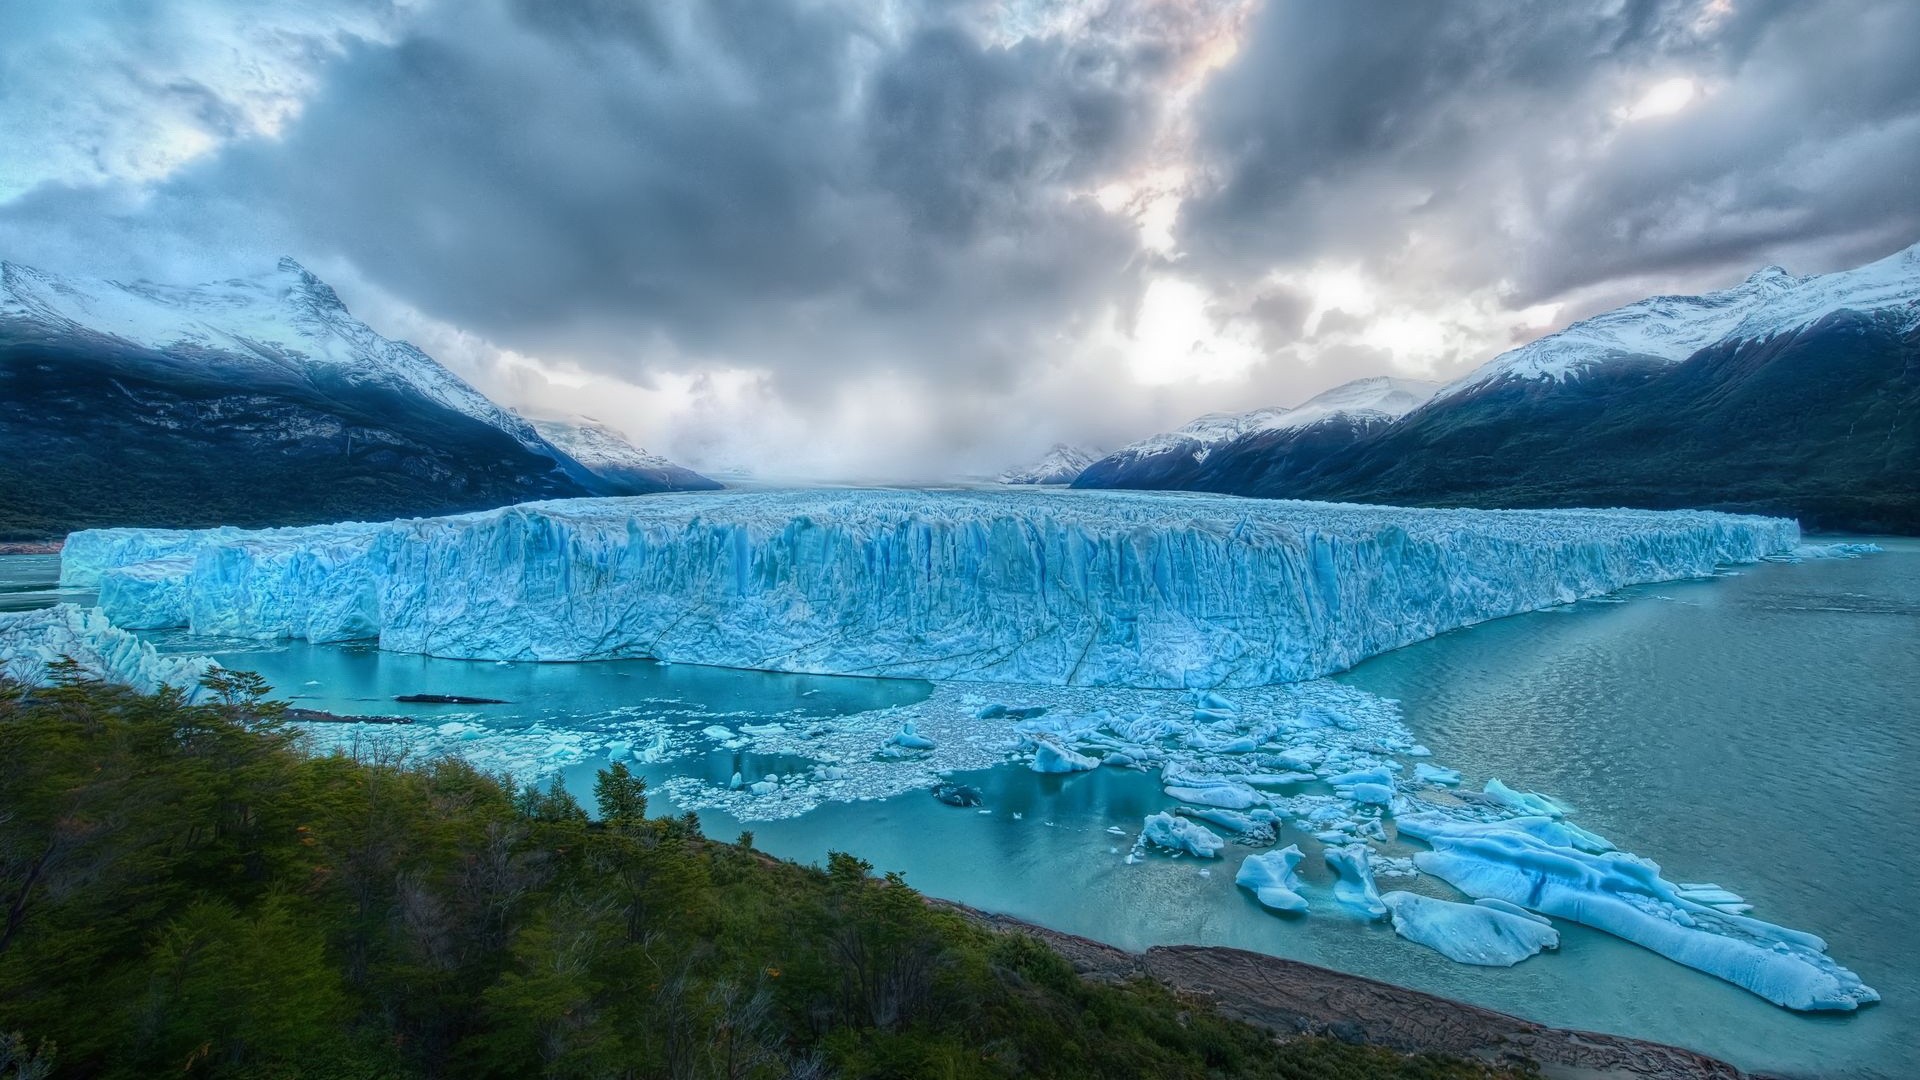 General 1920x1080 nature HDR landscape glacier mountains trees ice sky clouds Patagonia Perito Moreno Glacier